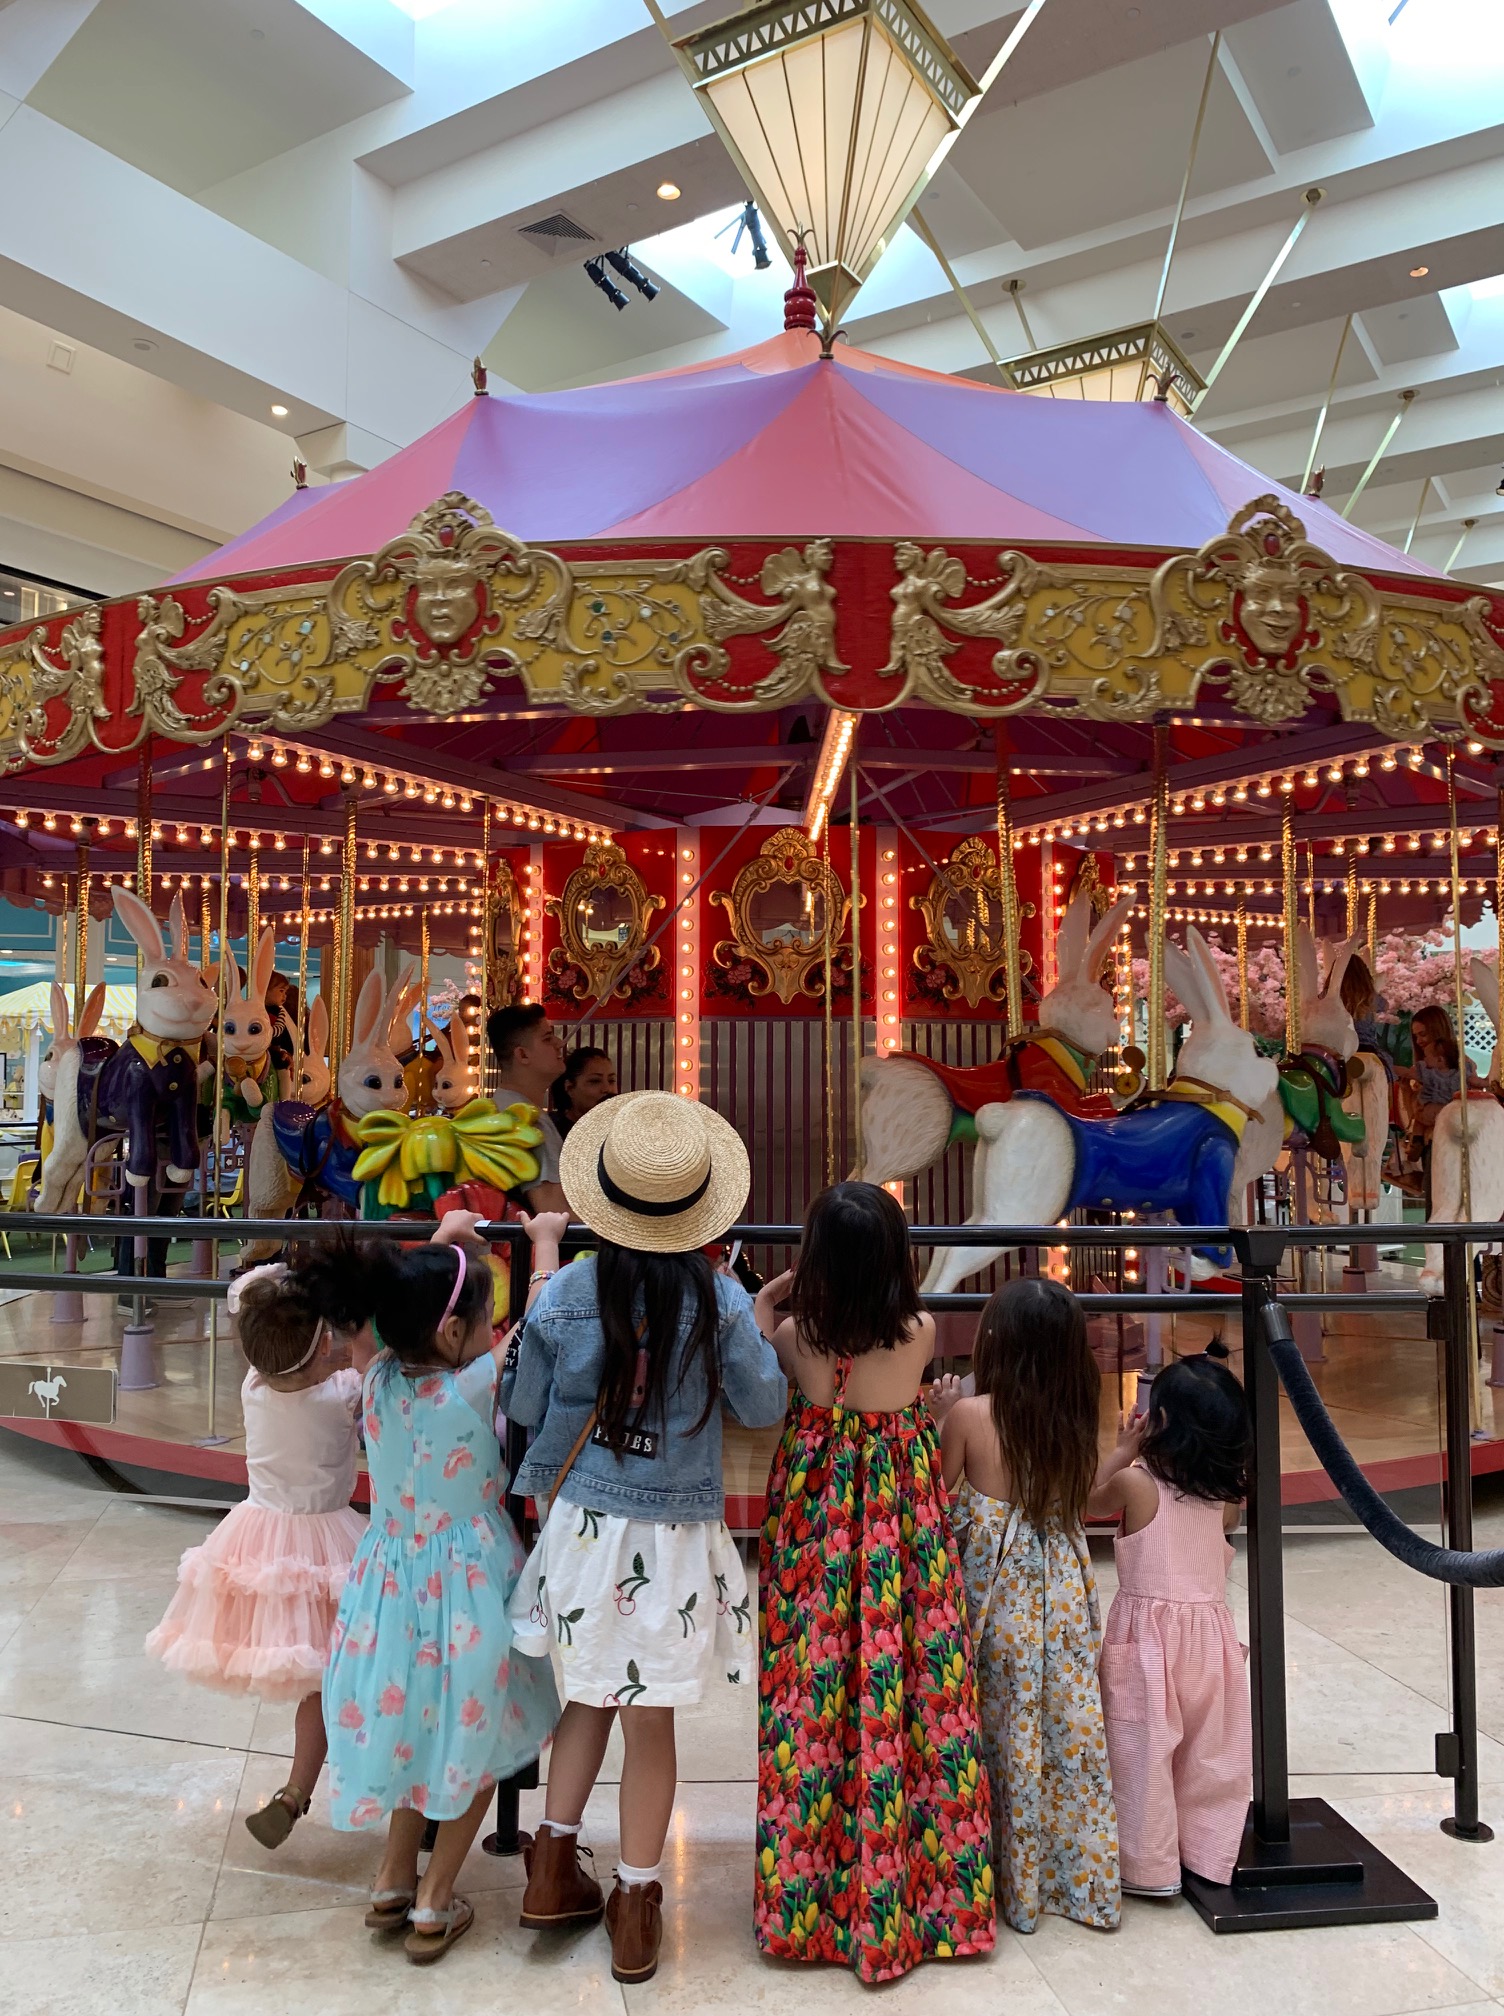 Carousel inside the South Coast Plaza in Costa Mesa